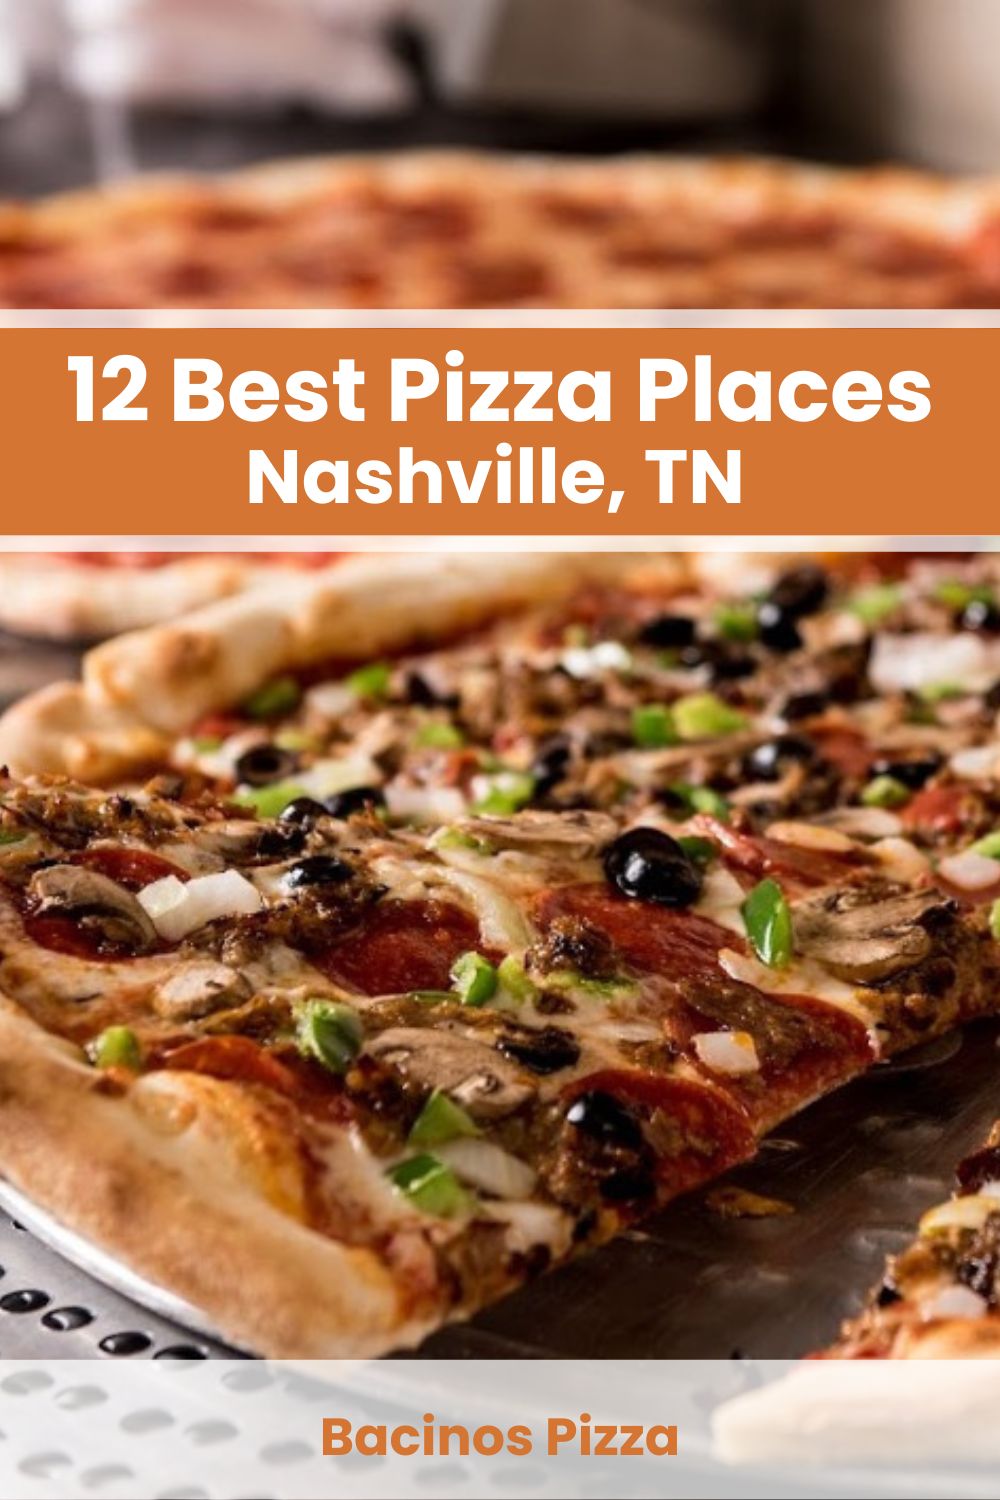 Best Pizza Places in Nashville